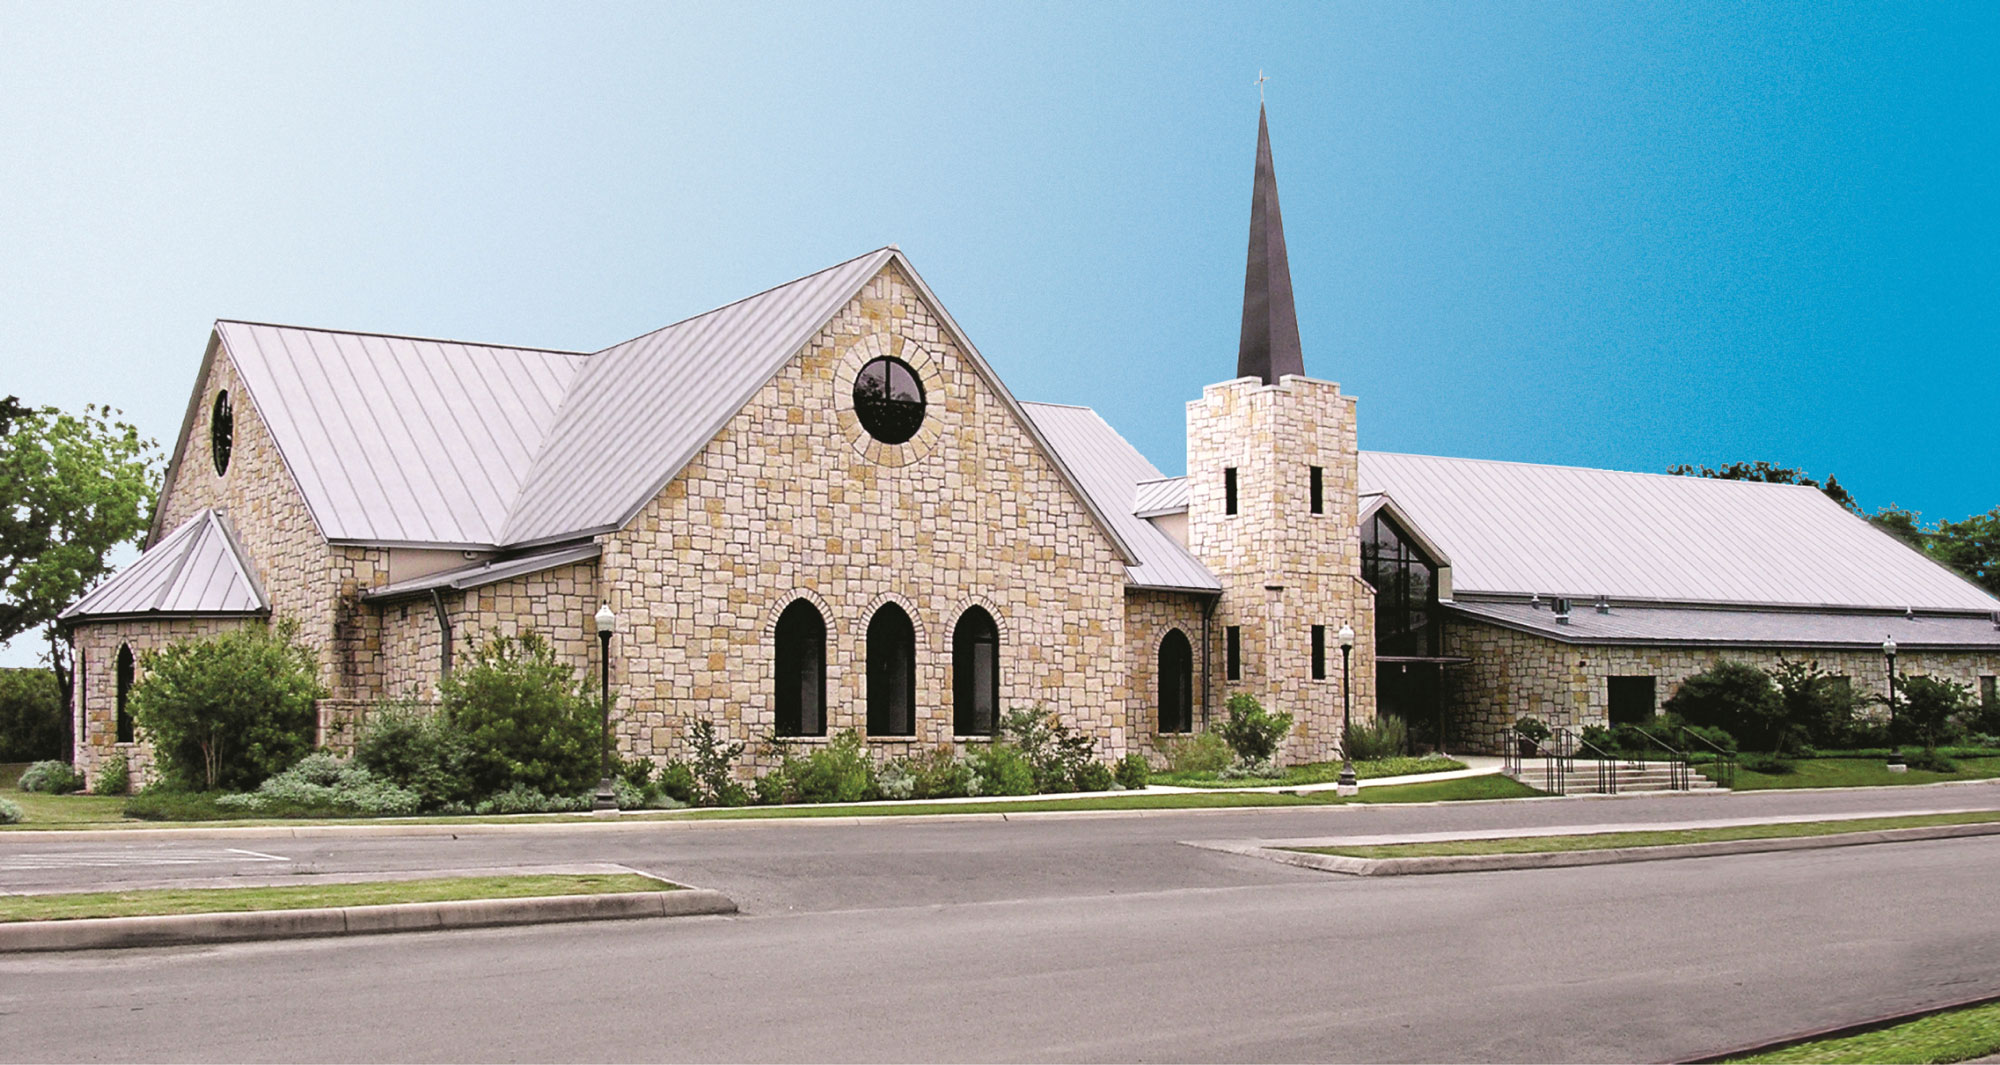 St. John Lutheran Church